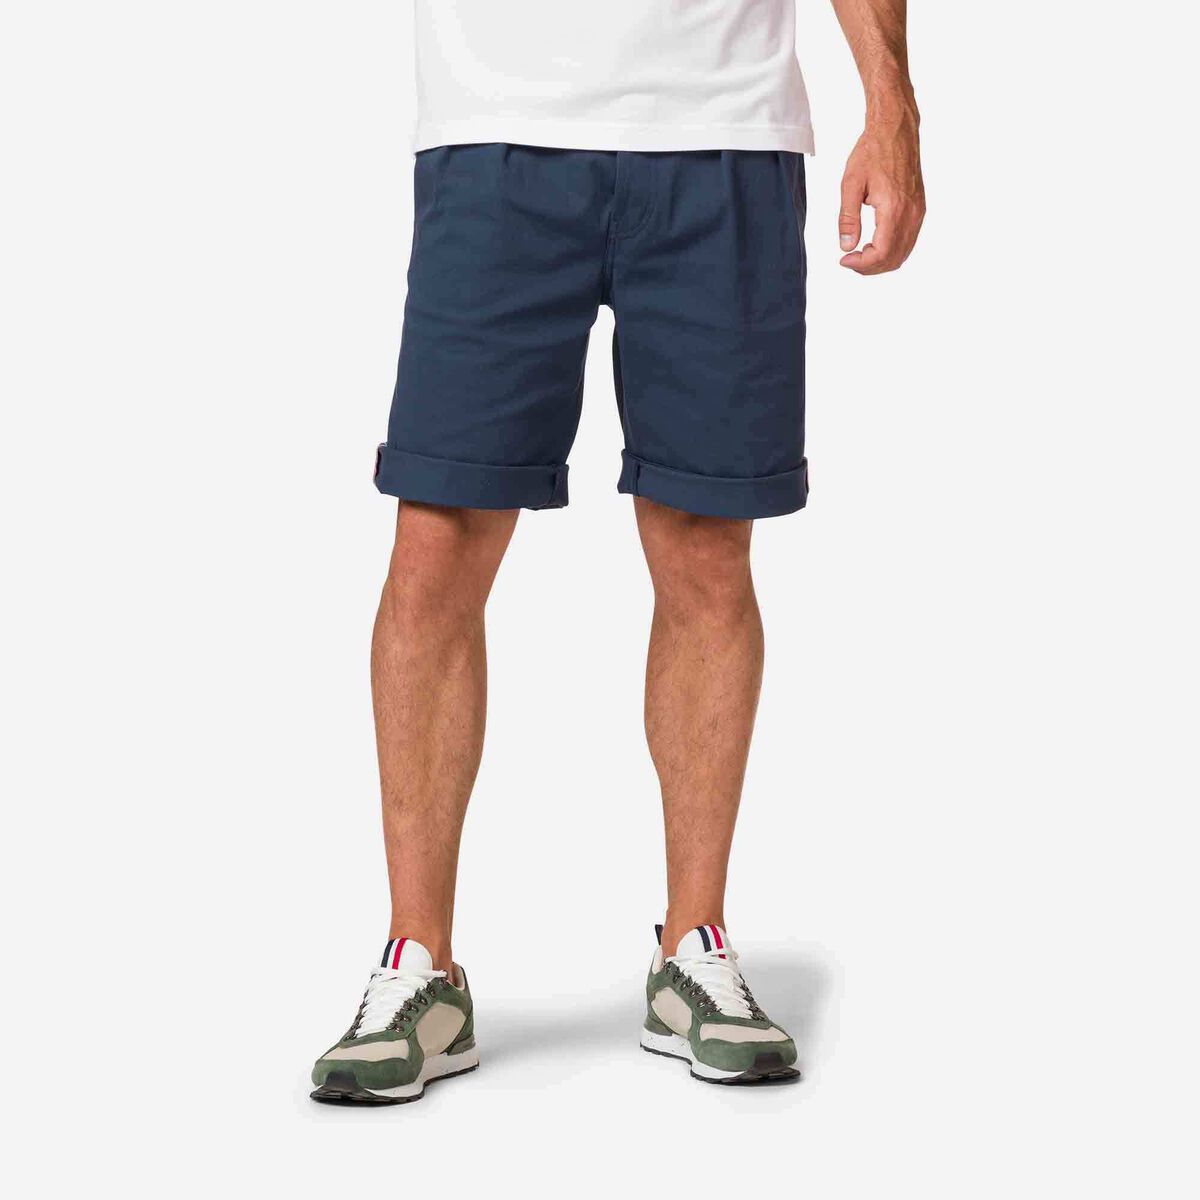 Rossignol Men's organic cotton chino shorts blue